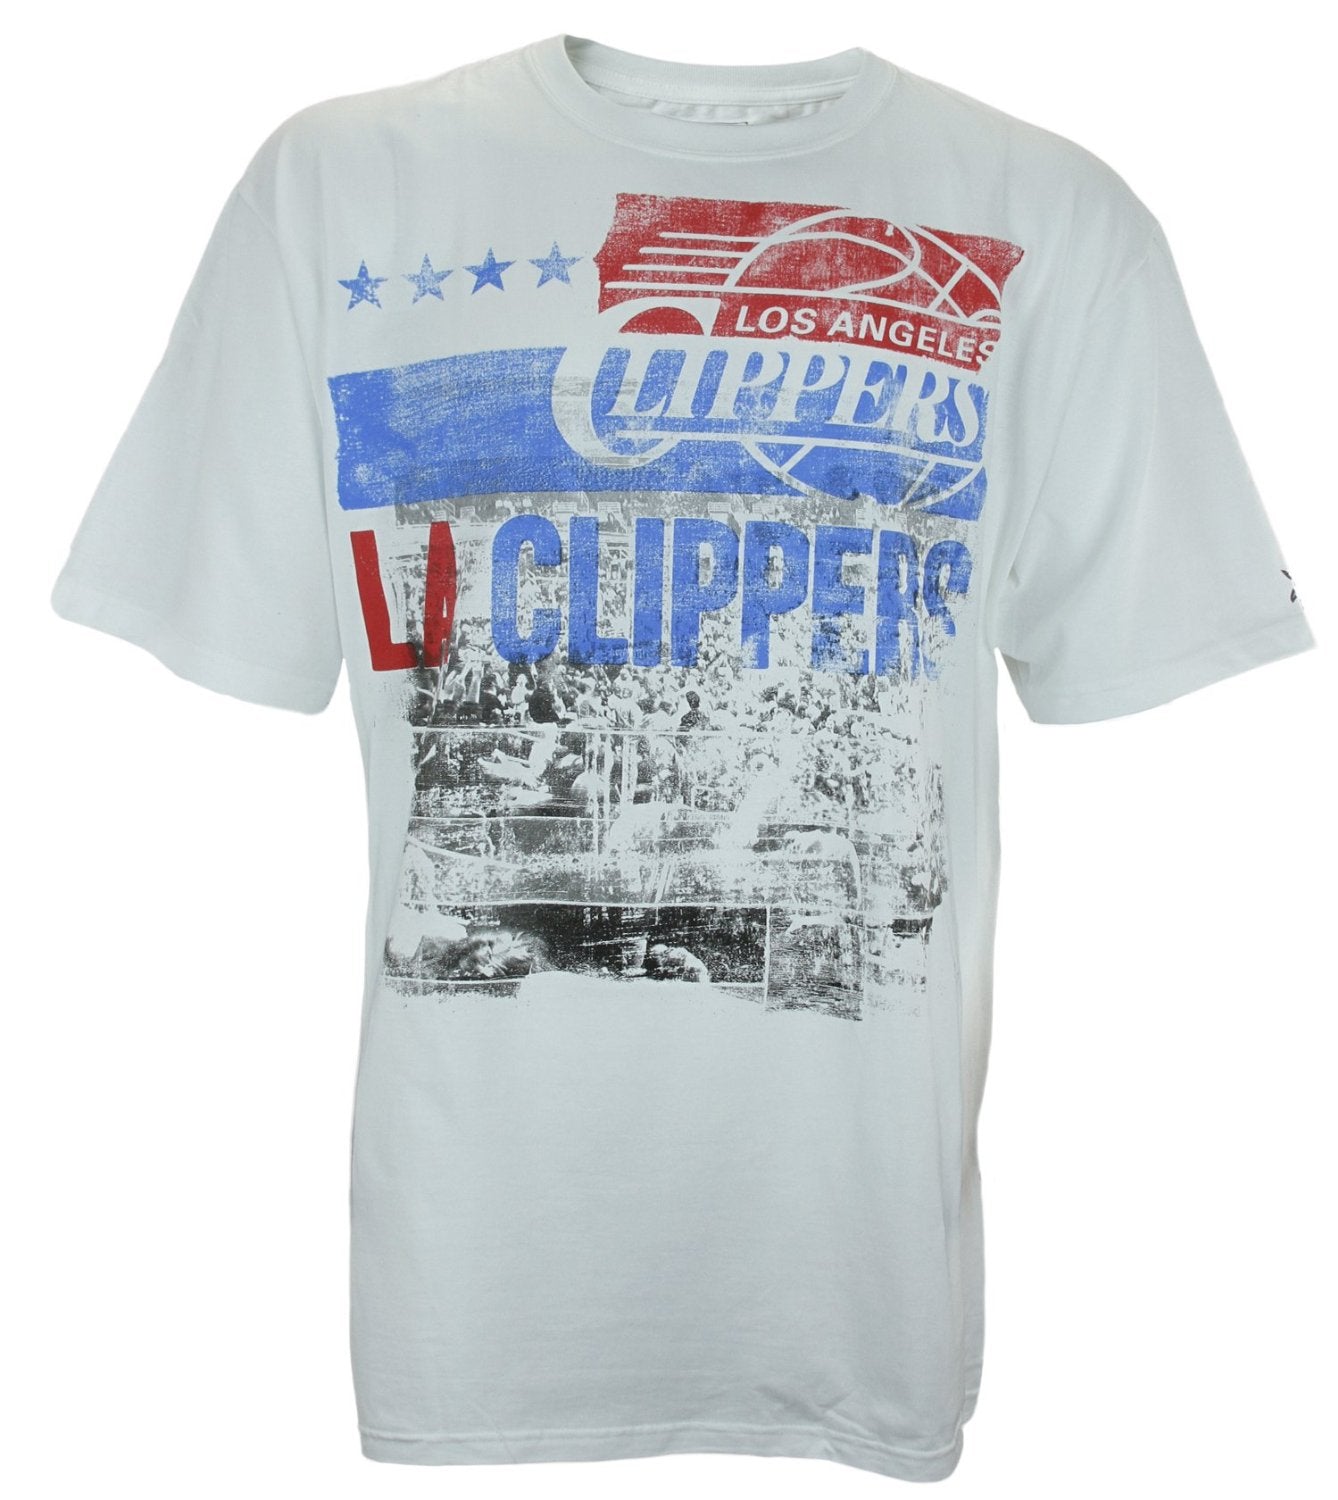 LA Clippers Basketball Team T-shirt 